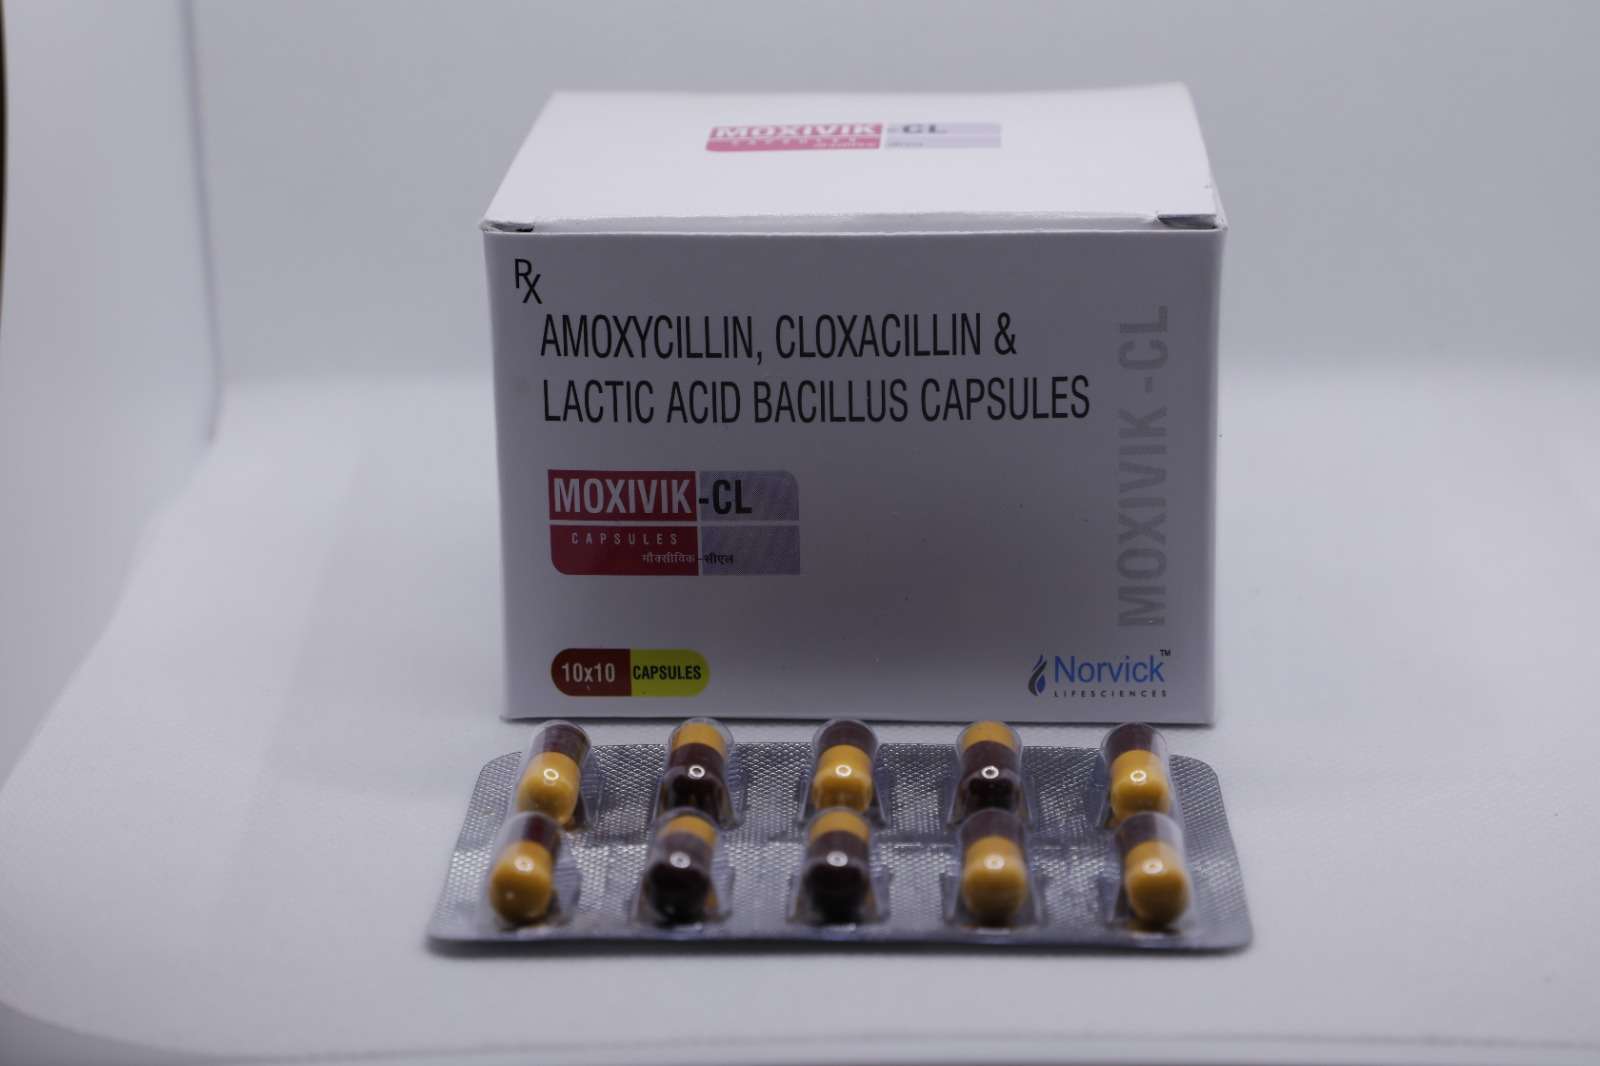 amoxycillin 250mg & cloxacillin 250mg & lactic acid bacillus